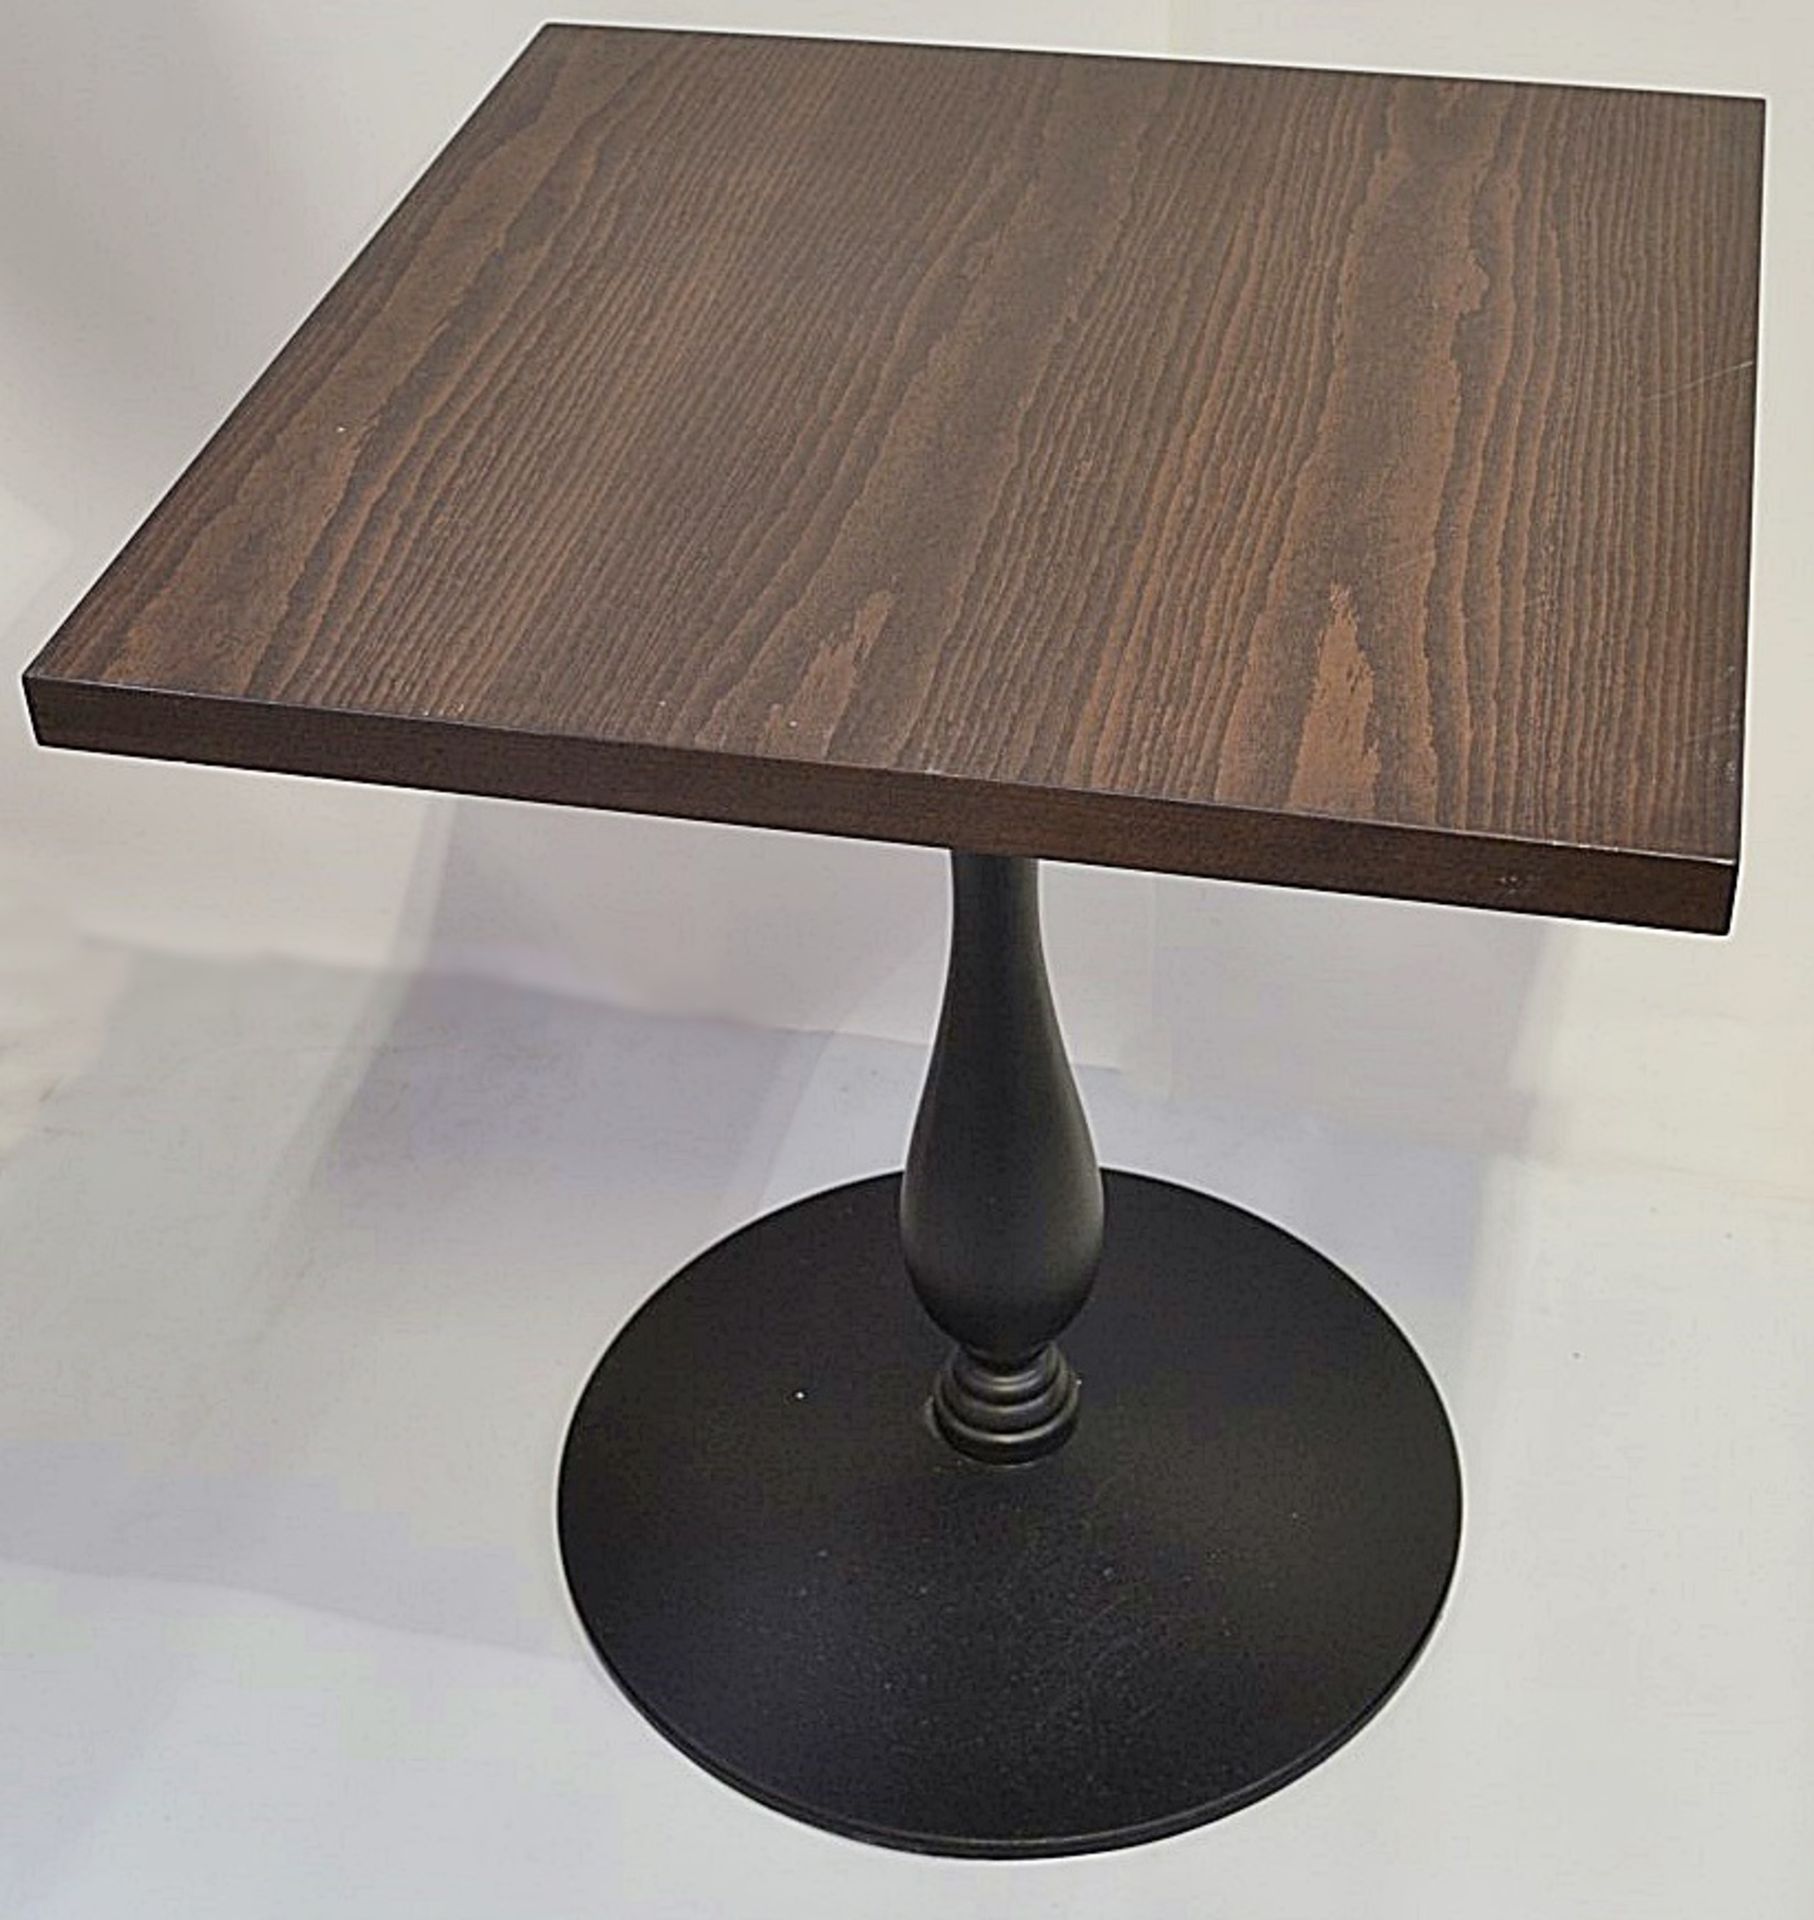 1 x Square Bistro Table - Dimensions: H76cm x W70 x D70cm - City Centre Restaurant Closure - Ref: - Image 4 of 5